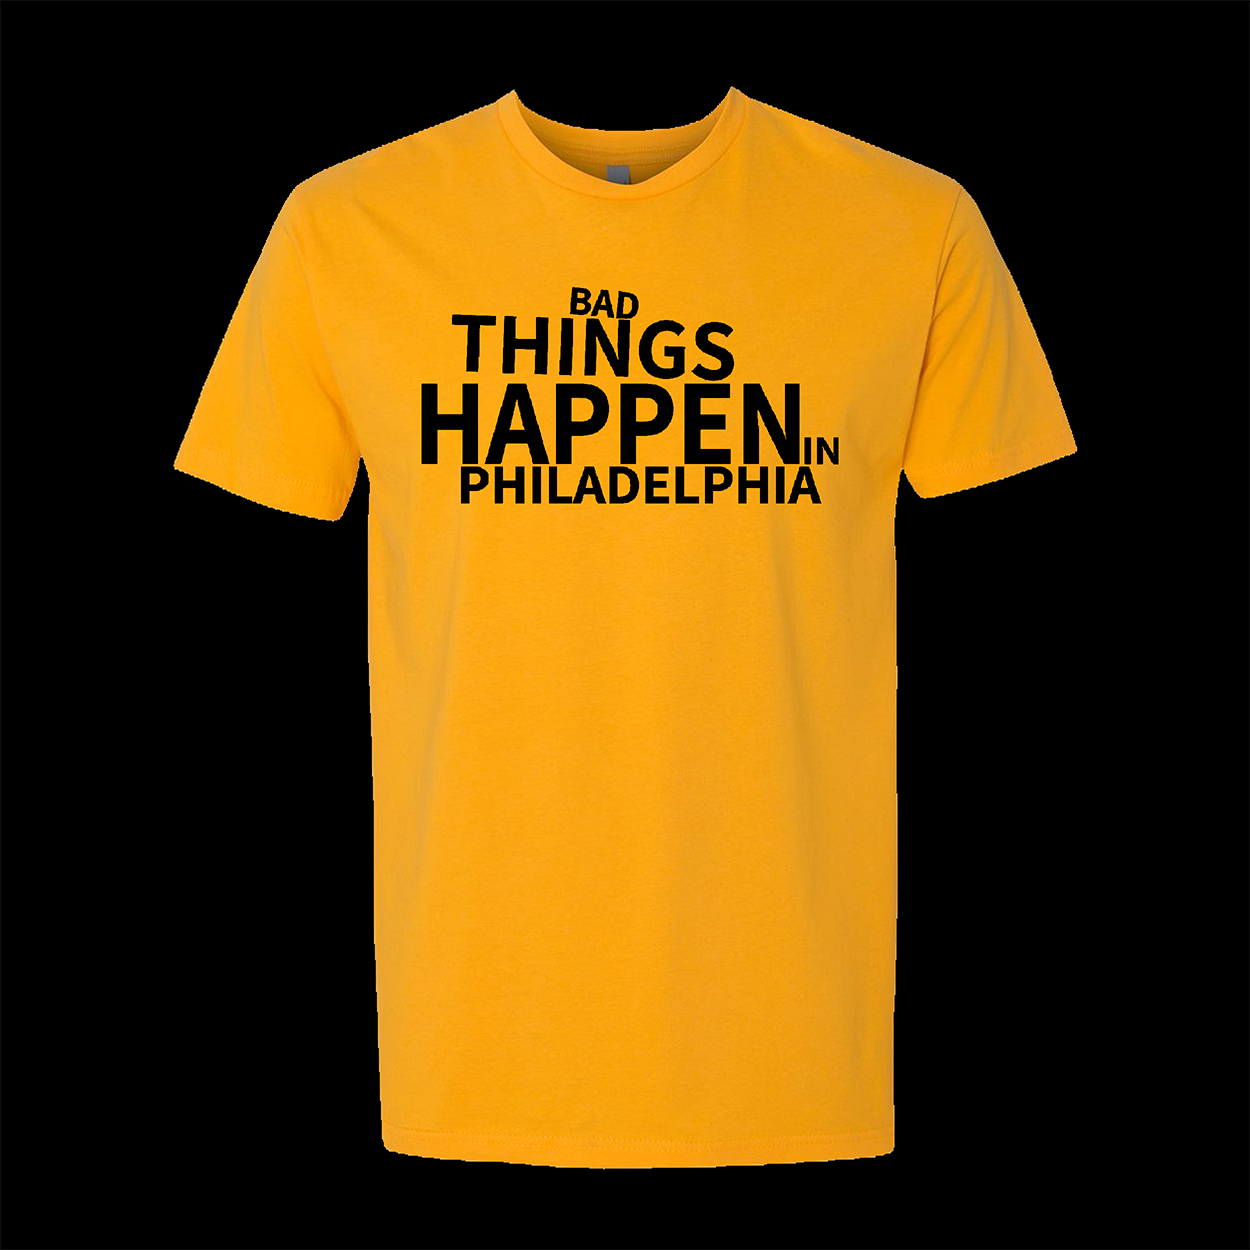 Bad Things Happen in Philadelphia T-shirt gold color